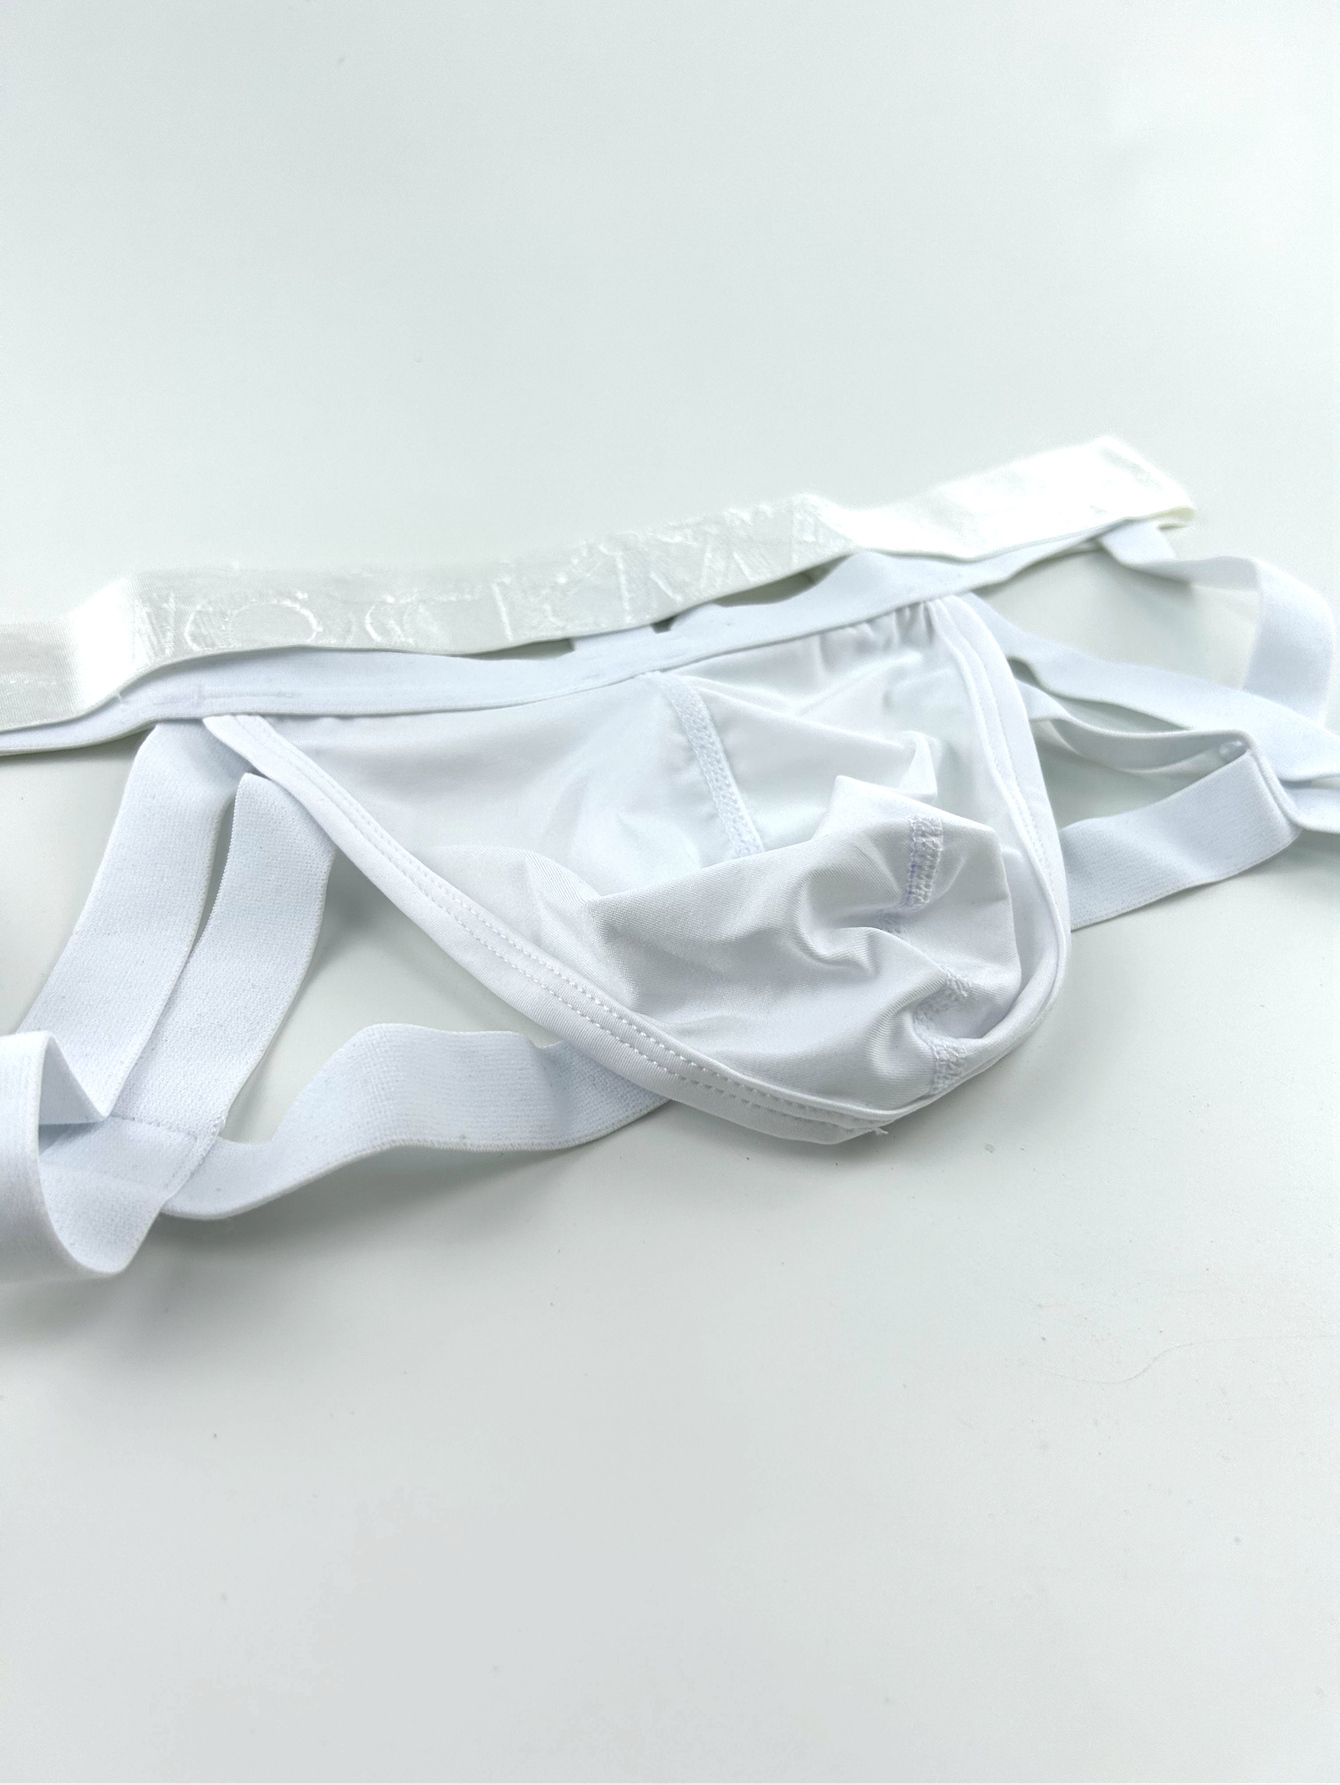 Men's Jockstrap Underwear Low Waist Mesh Breathable Athletic